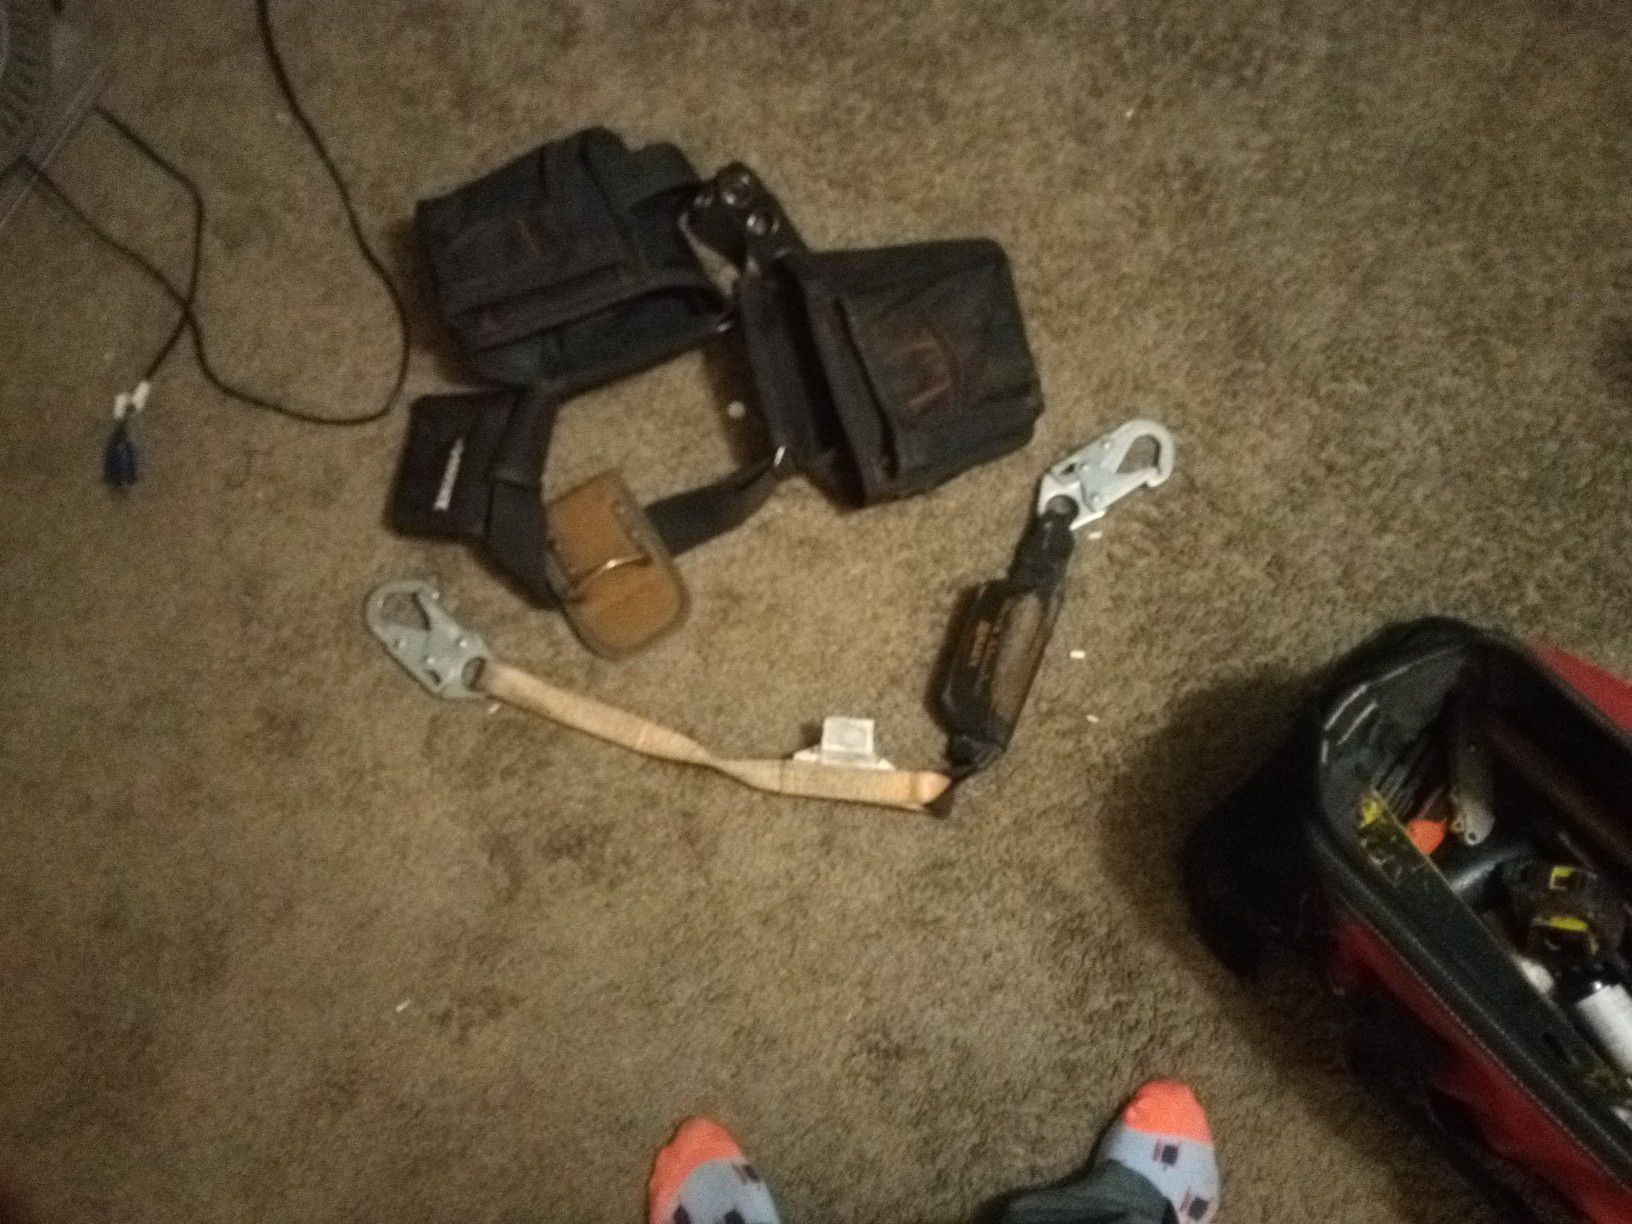 Husky tool belt and strap